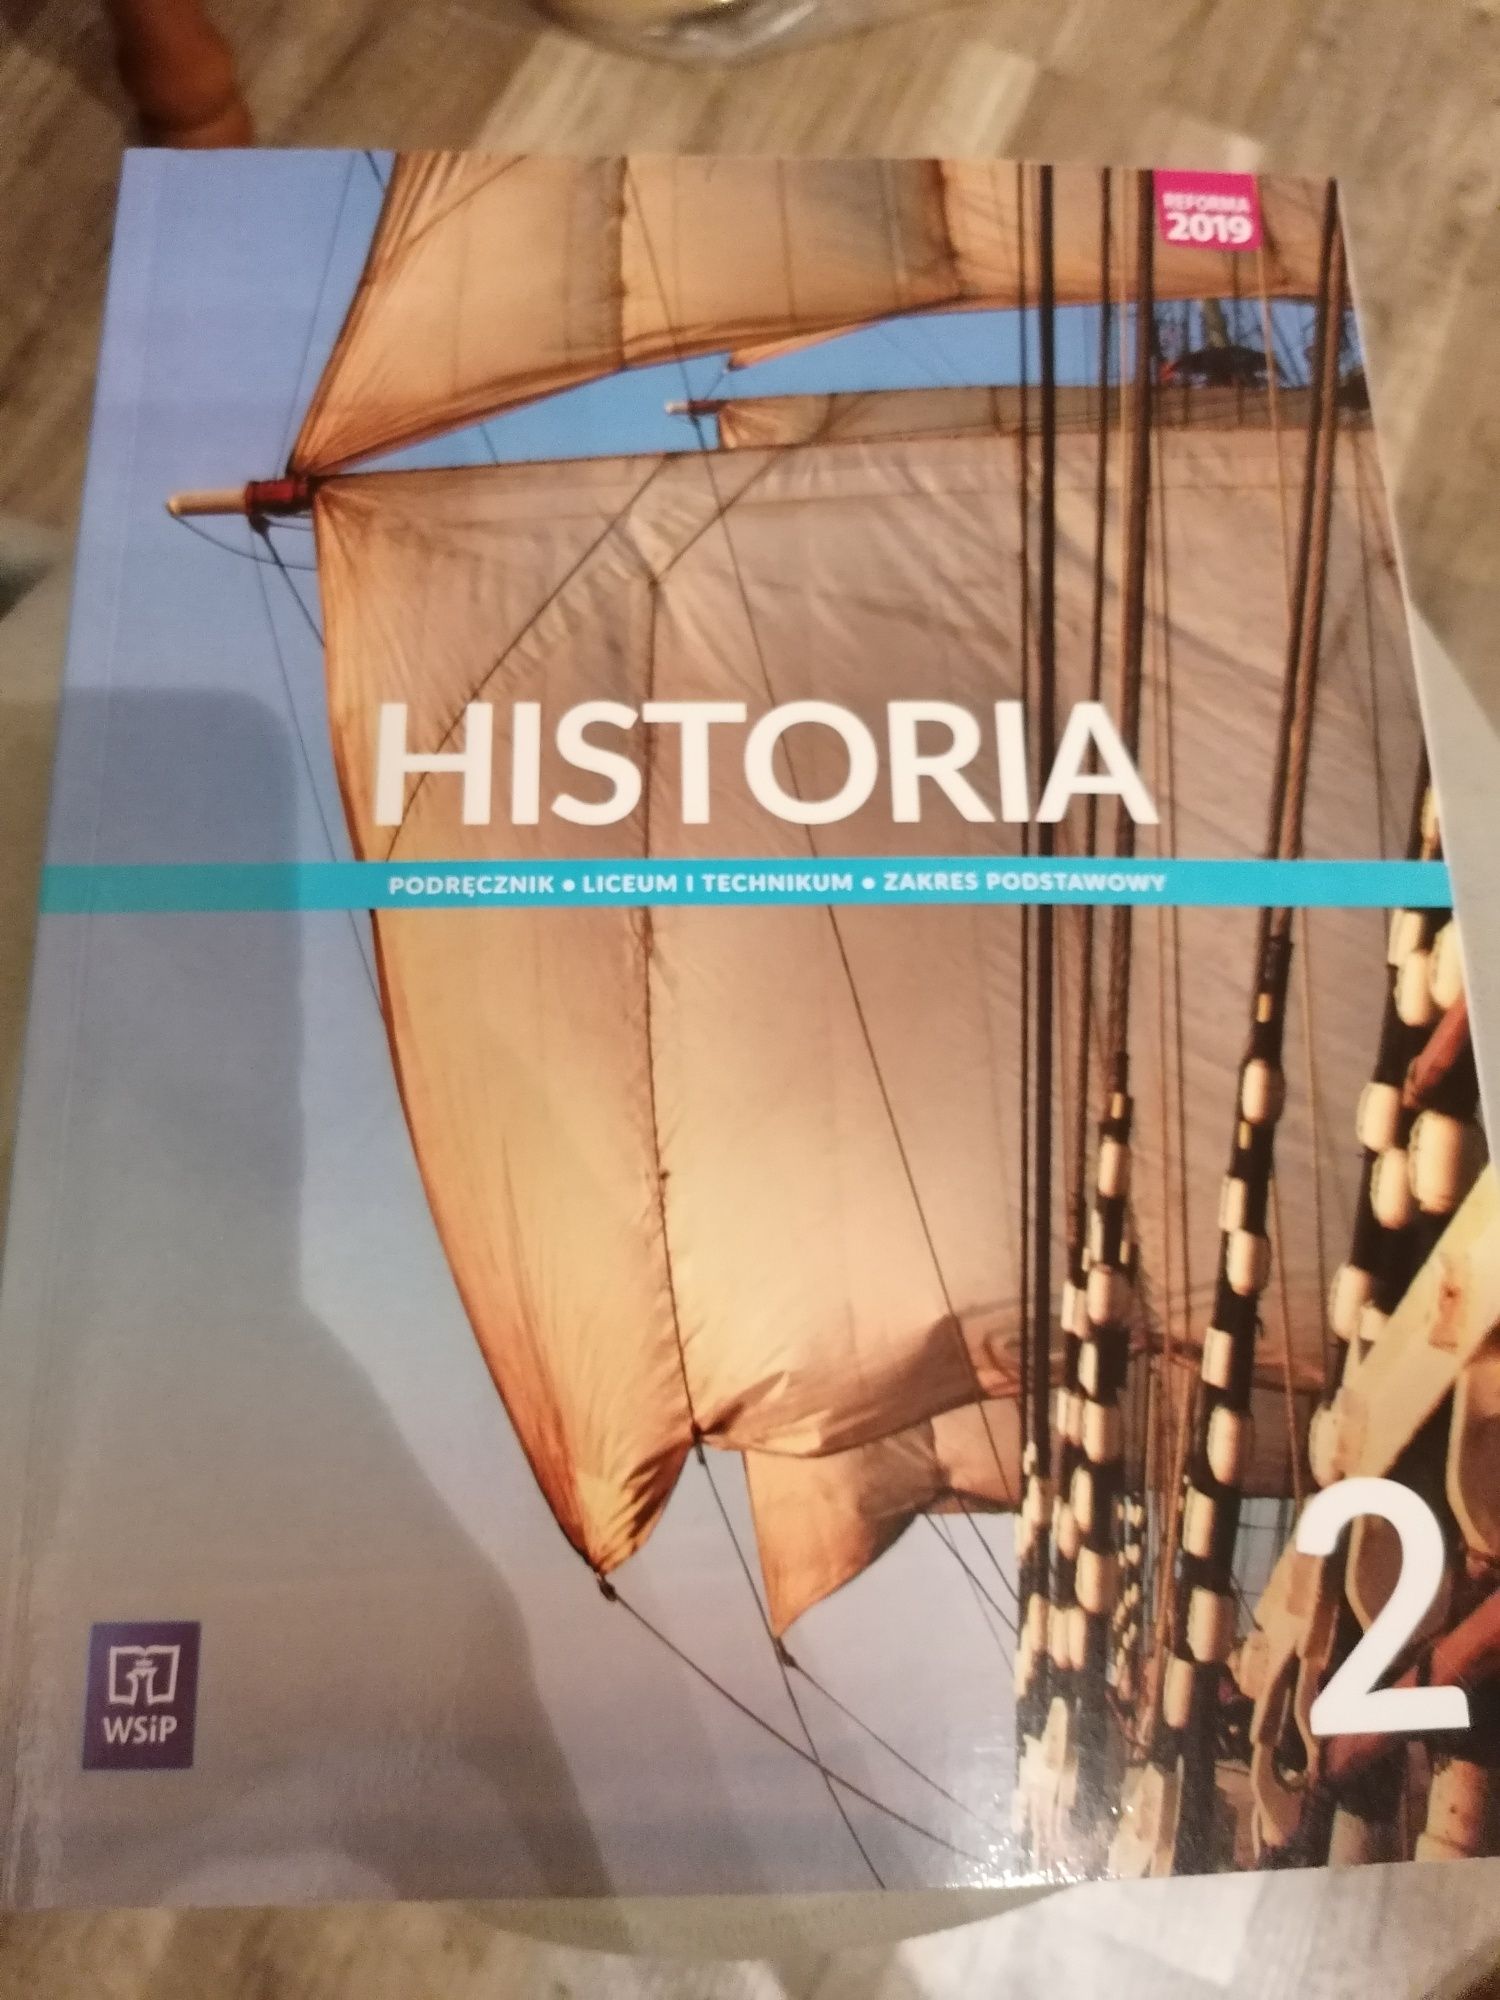 Podręcznik do historii Historia liceum i technikum zakres podstawowy